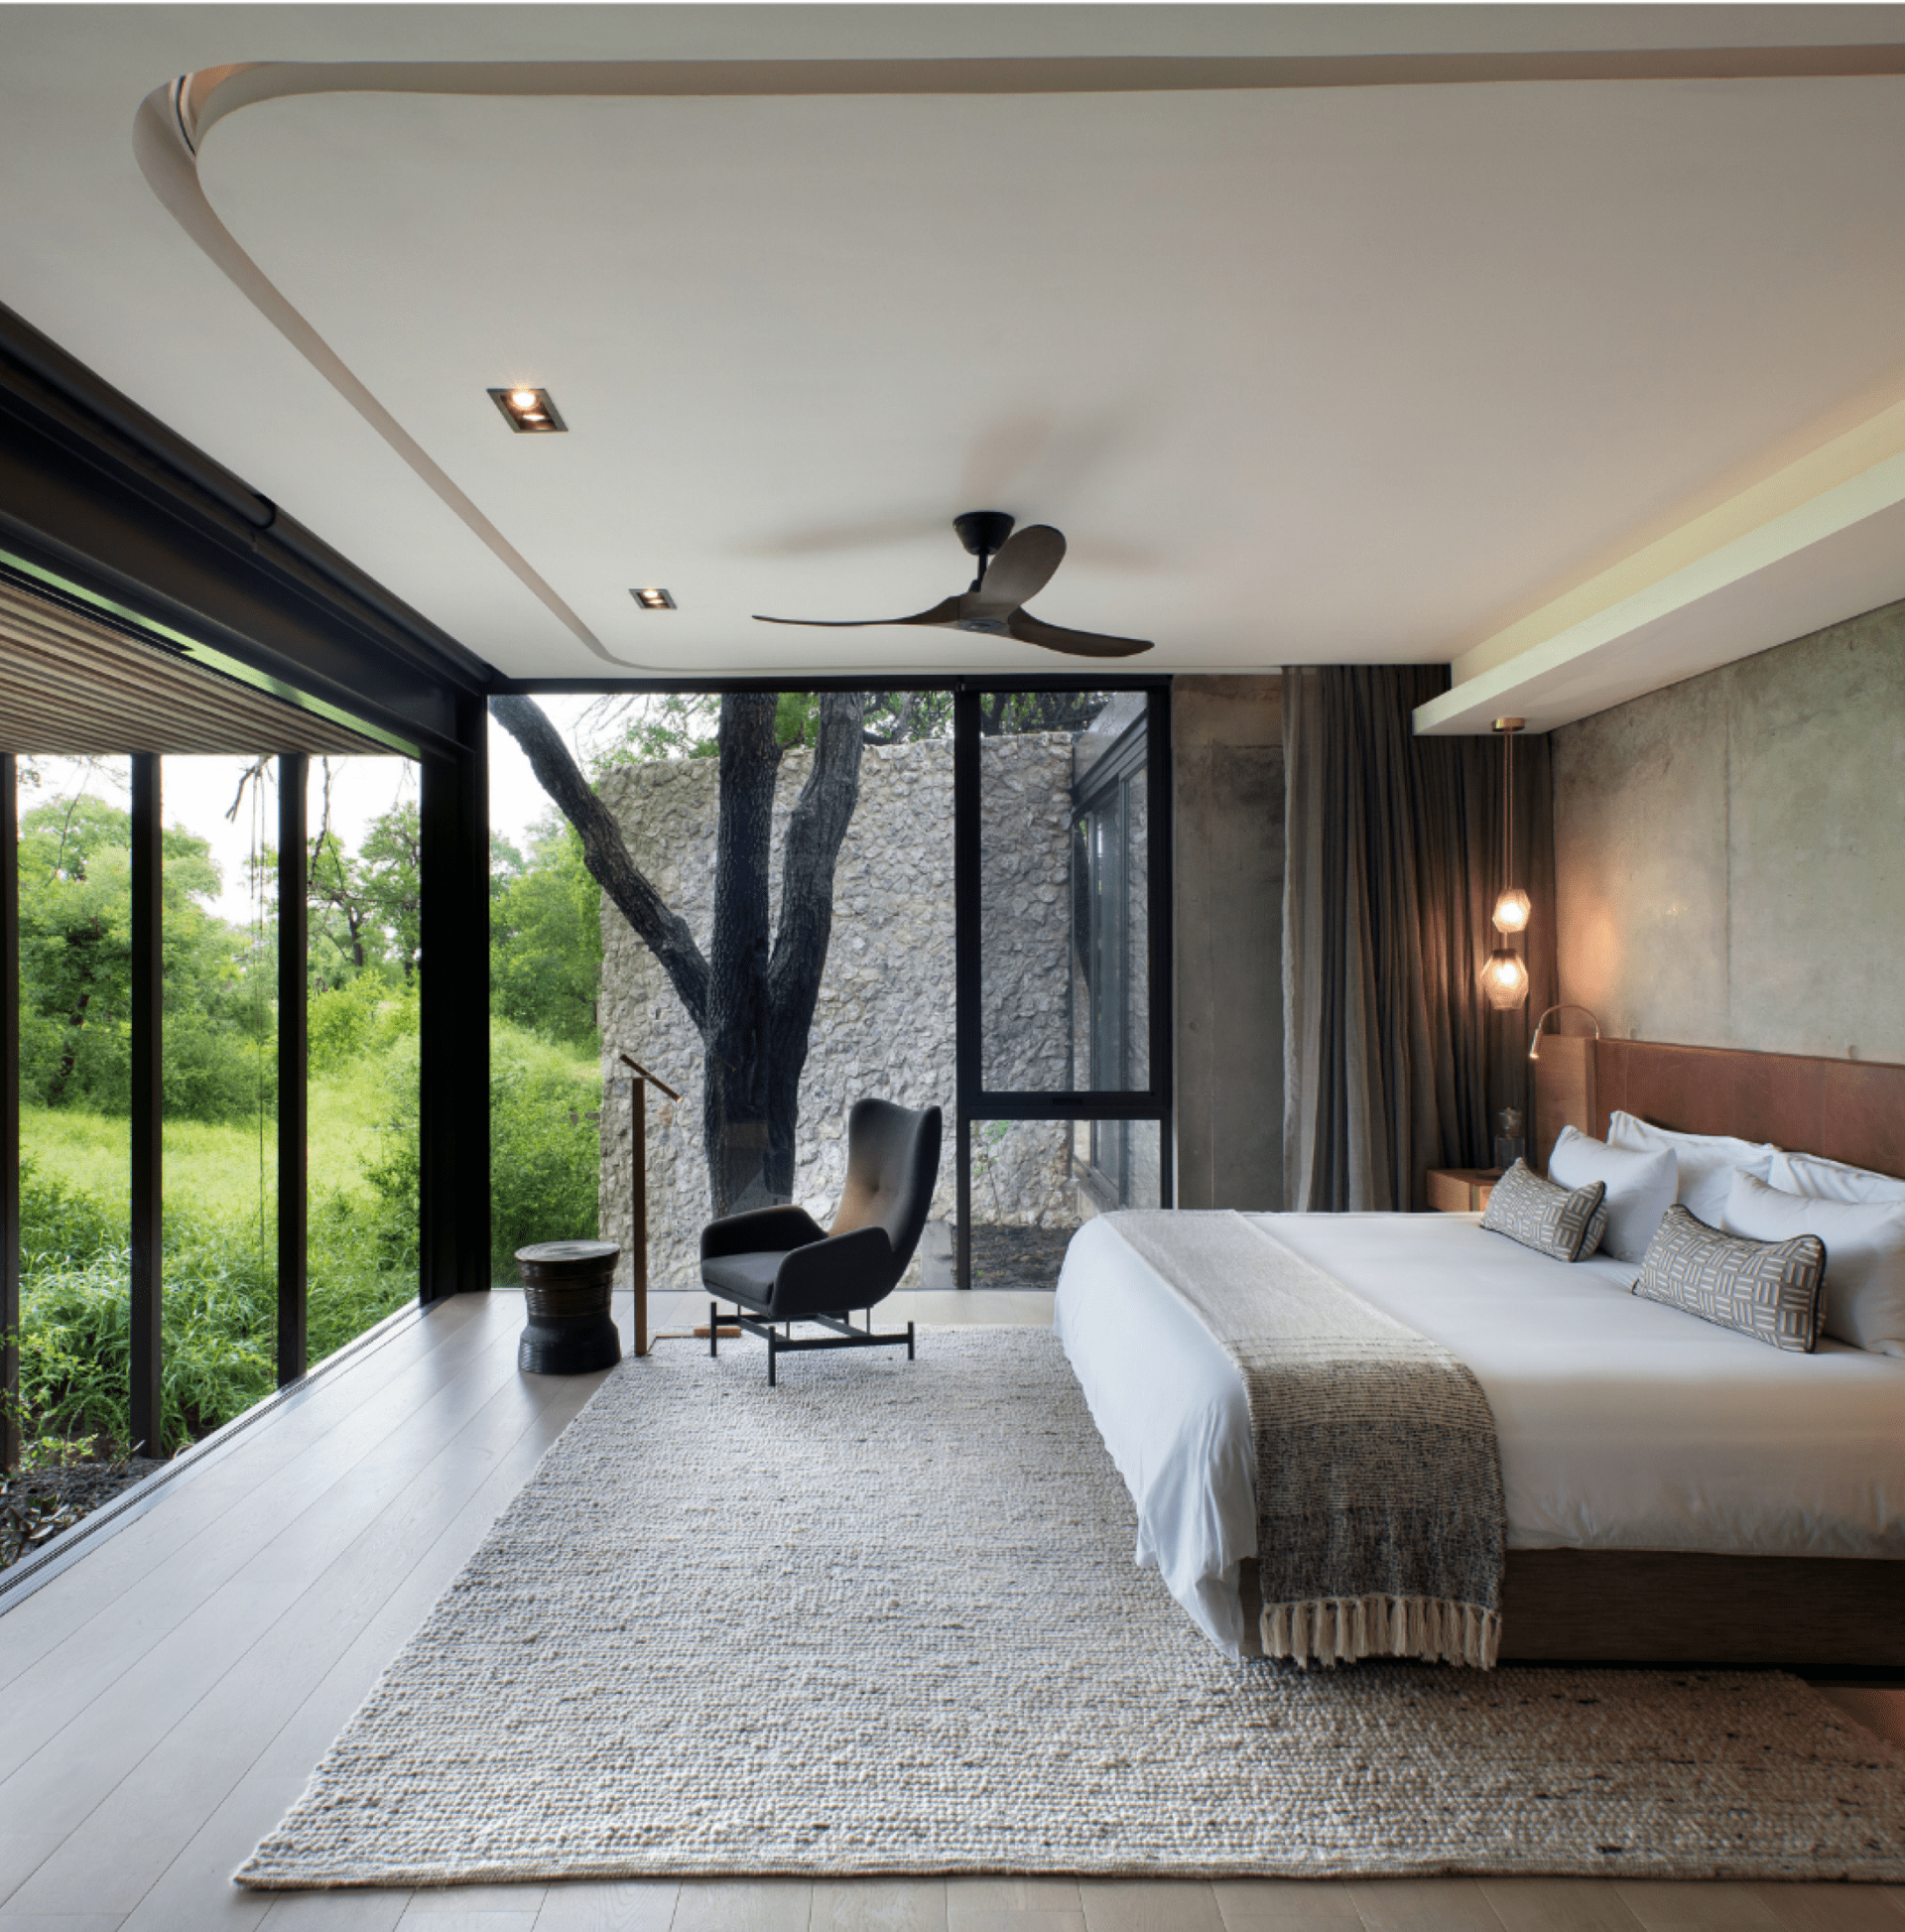 Luxurious room with glass walls overlooking safari bush